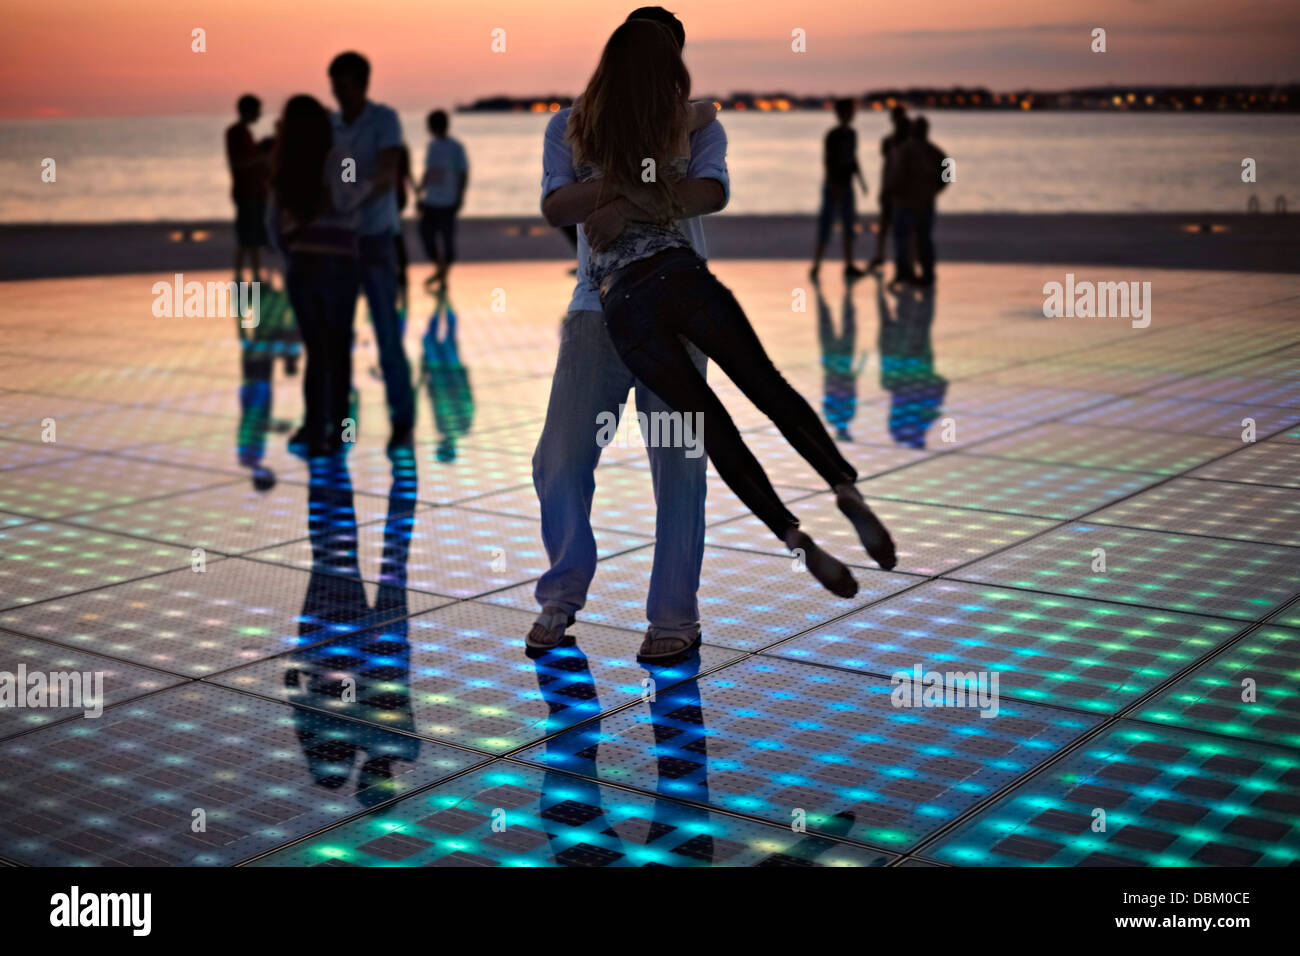 Croatia, Dalmatia, Solar panels as a dance floor, sunset in background Stock Photo